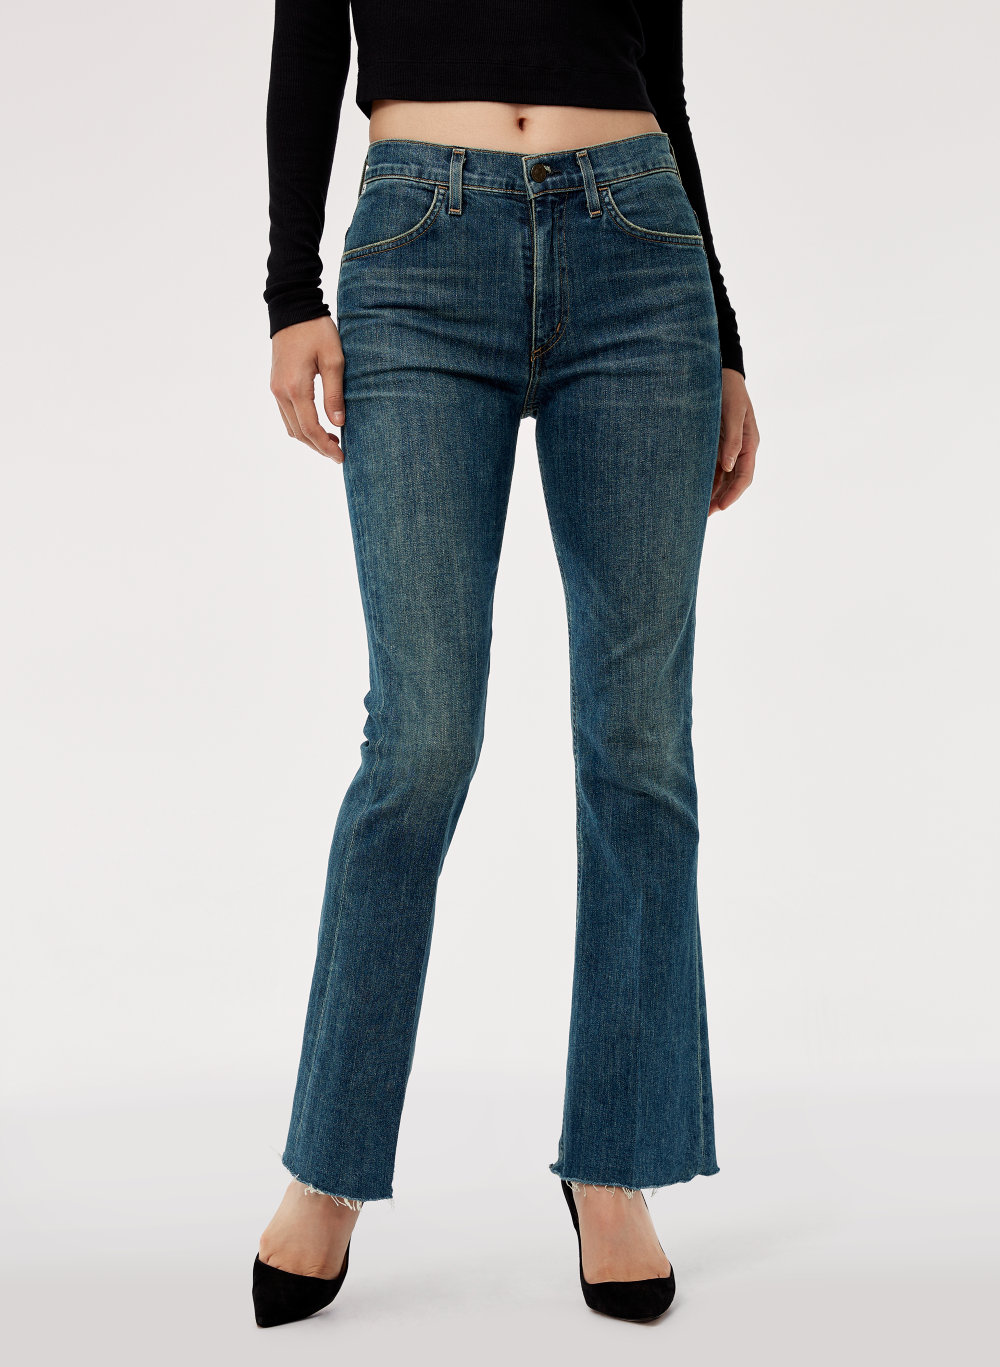 710 super skinny jeans